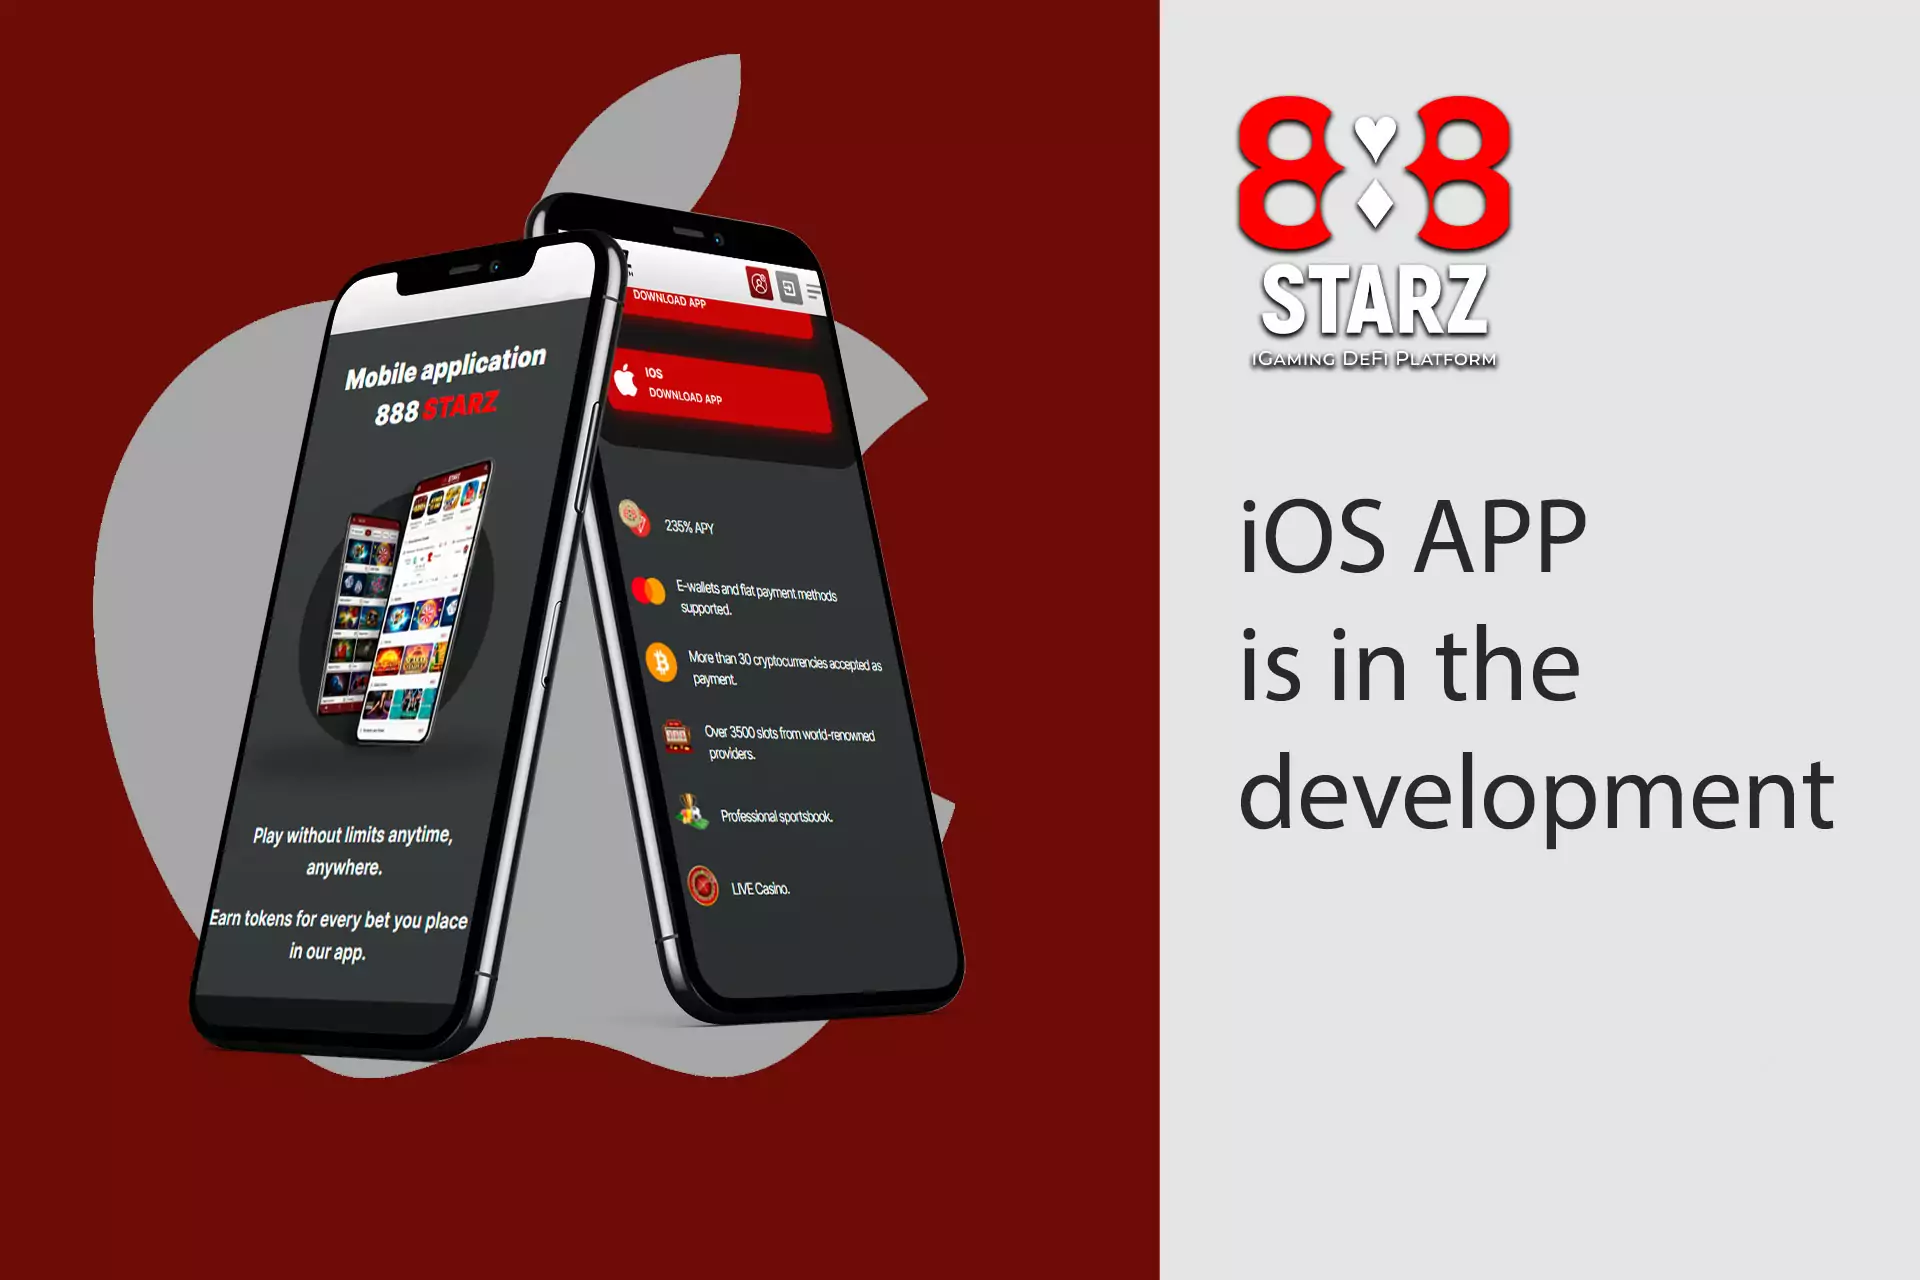 The 888starz app for iOS is in development.